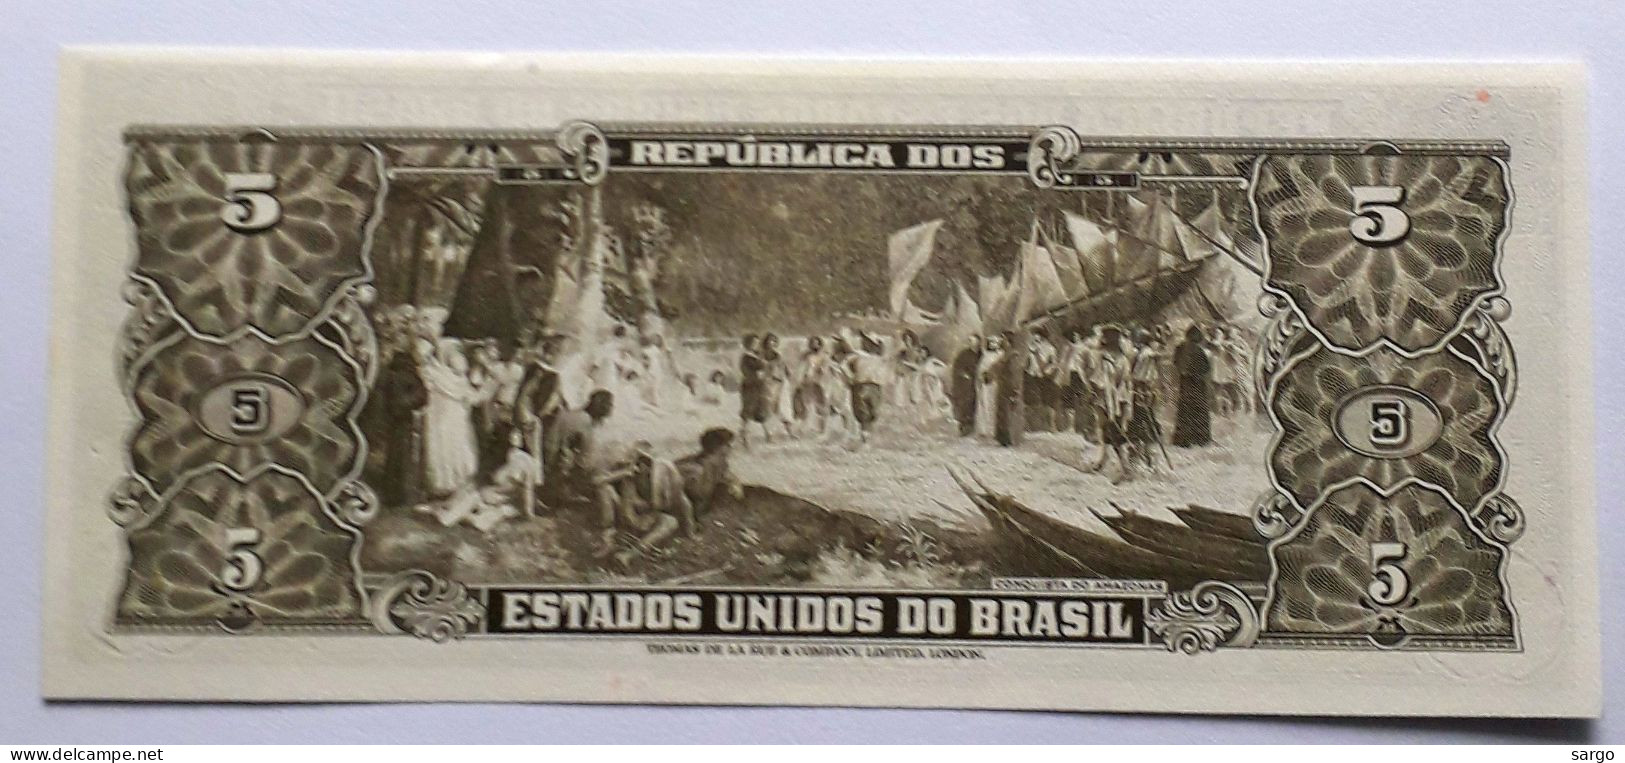 BRAZIL - 5 CRUZEIROS - P 176 A (1962 -1964) - UNC - BANKNOTES - PAPER MONEY - CARTAMONETA - - Brasile